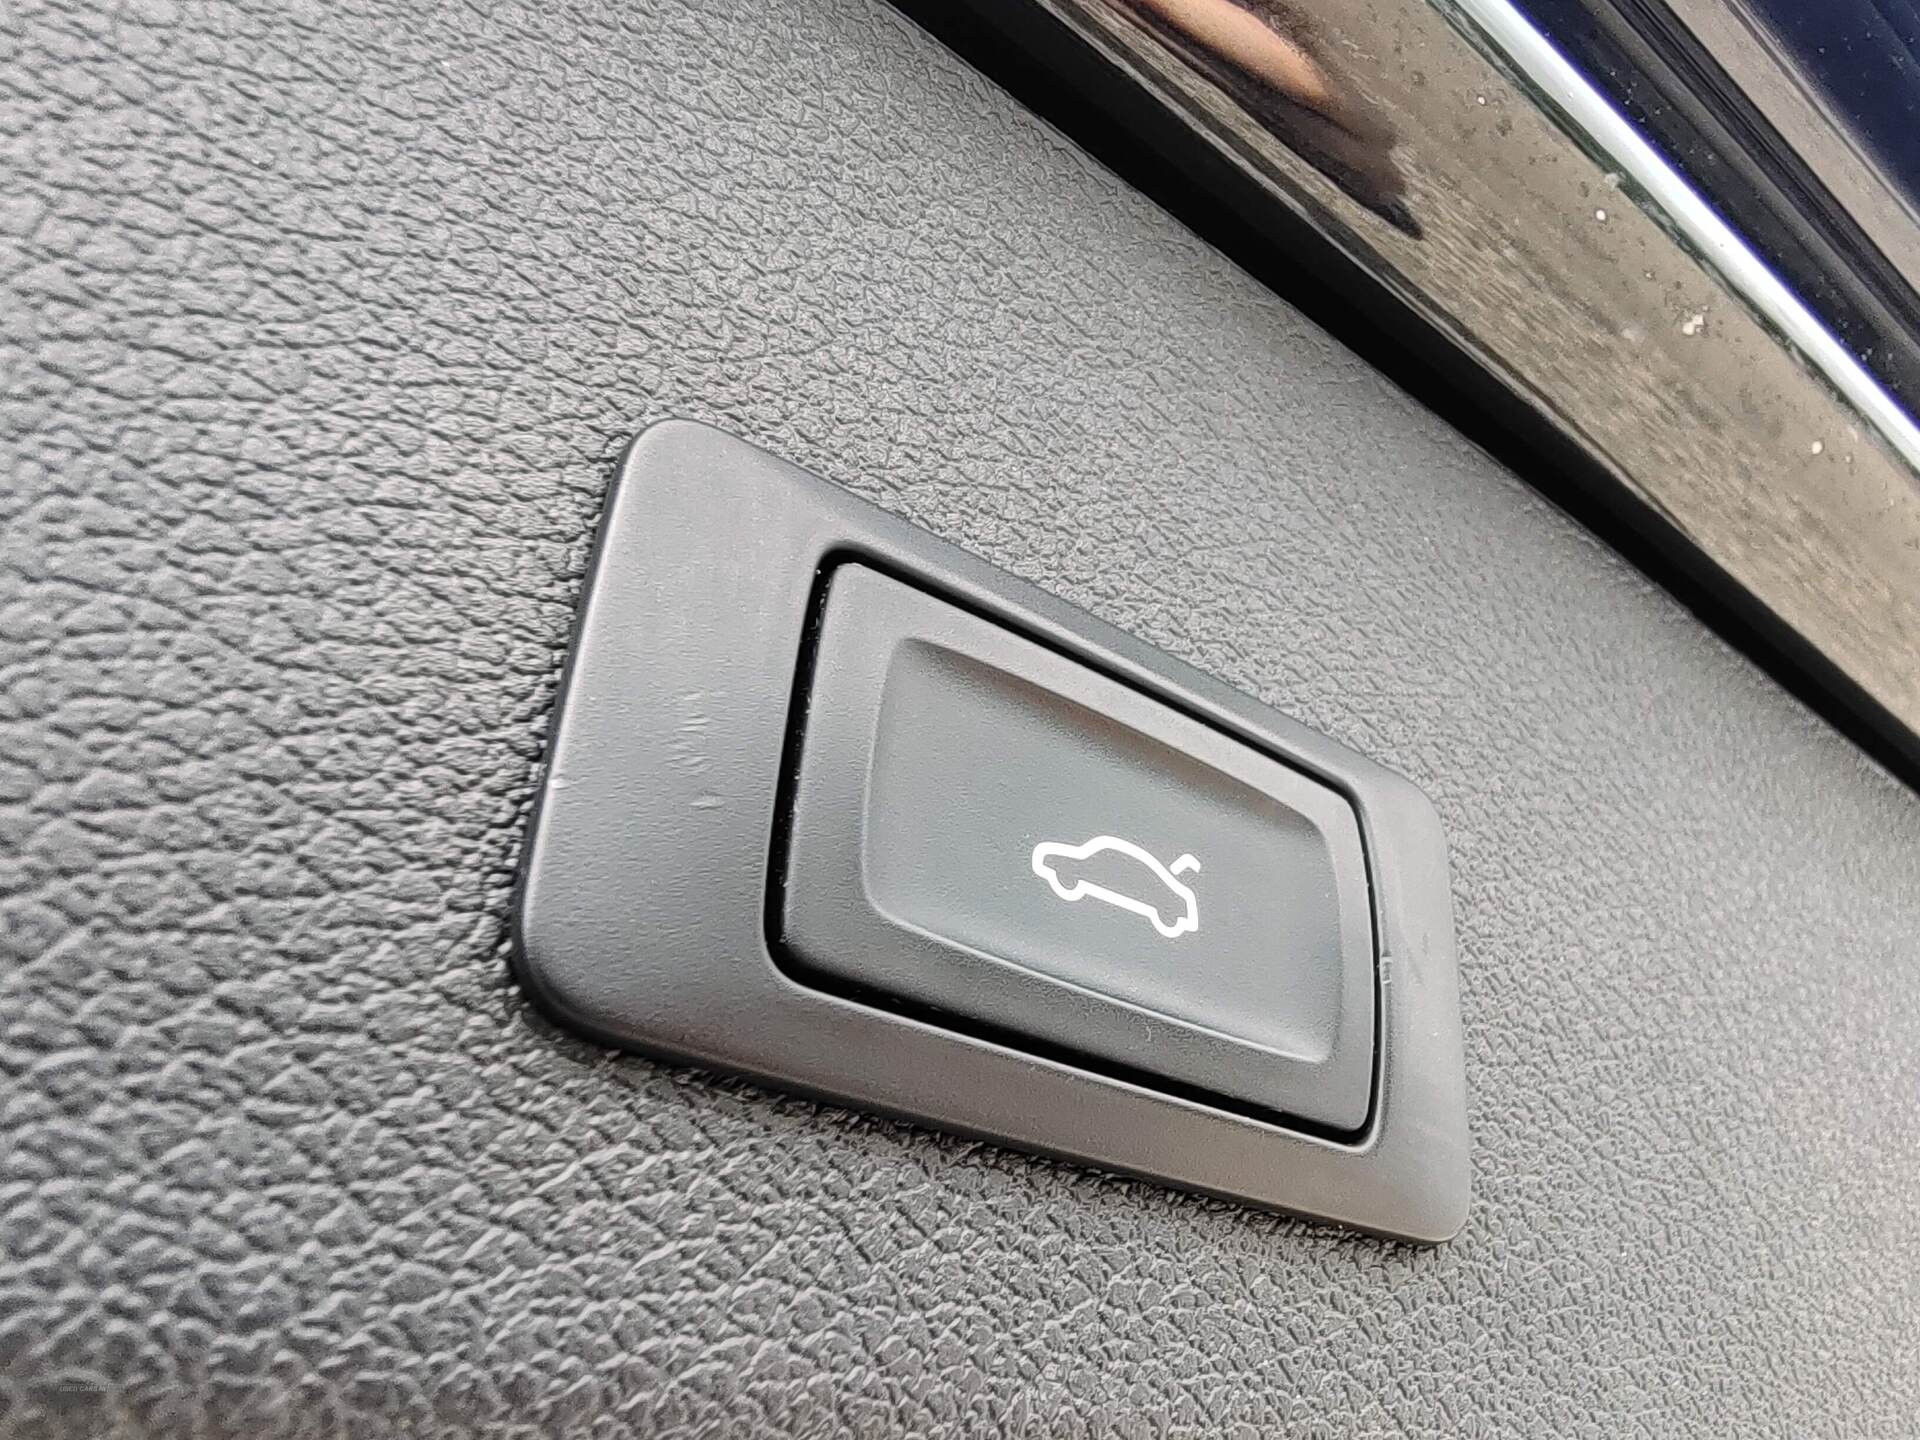 Audi Q5 ESTATE SPECIAL EDITIONS in Fermanagh